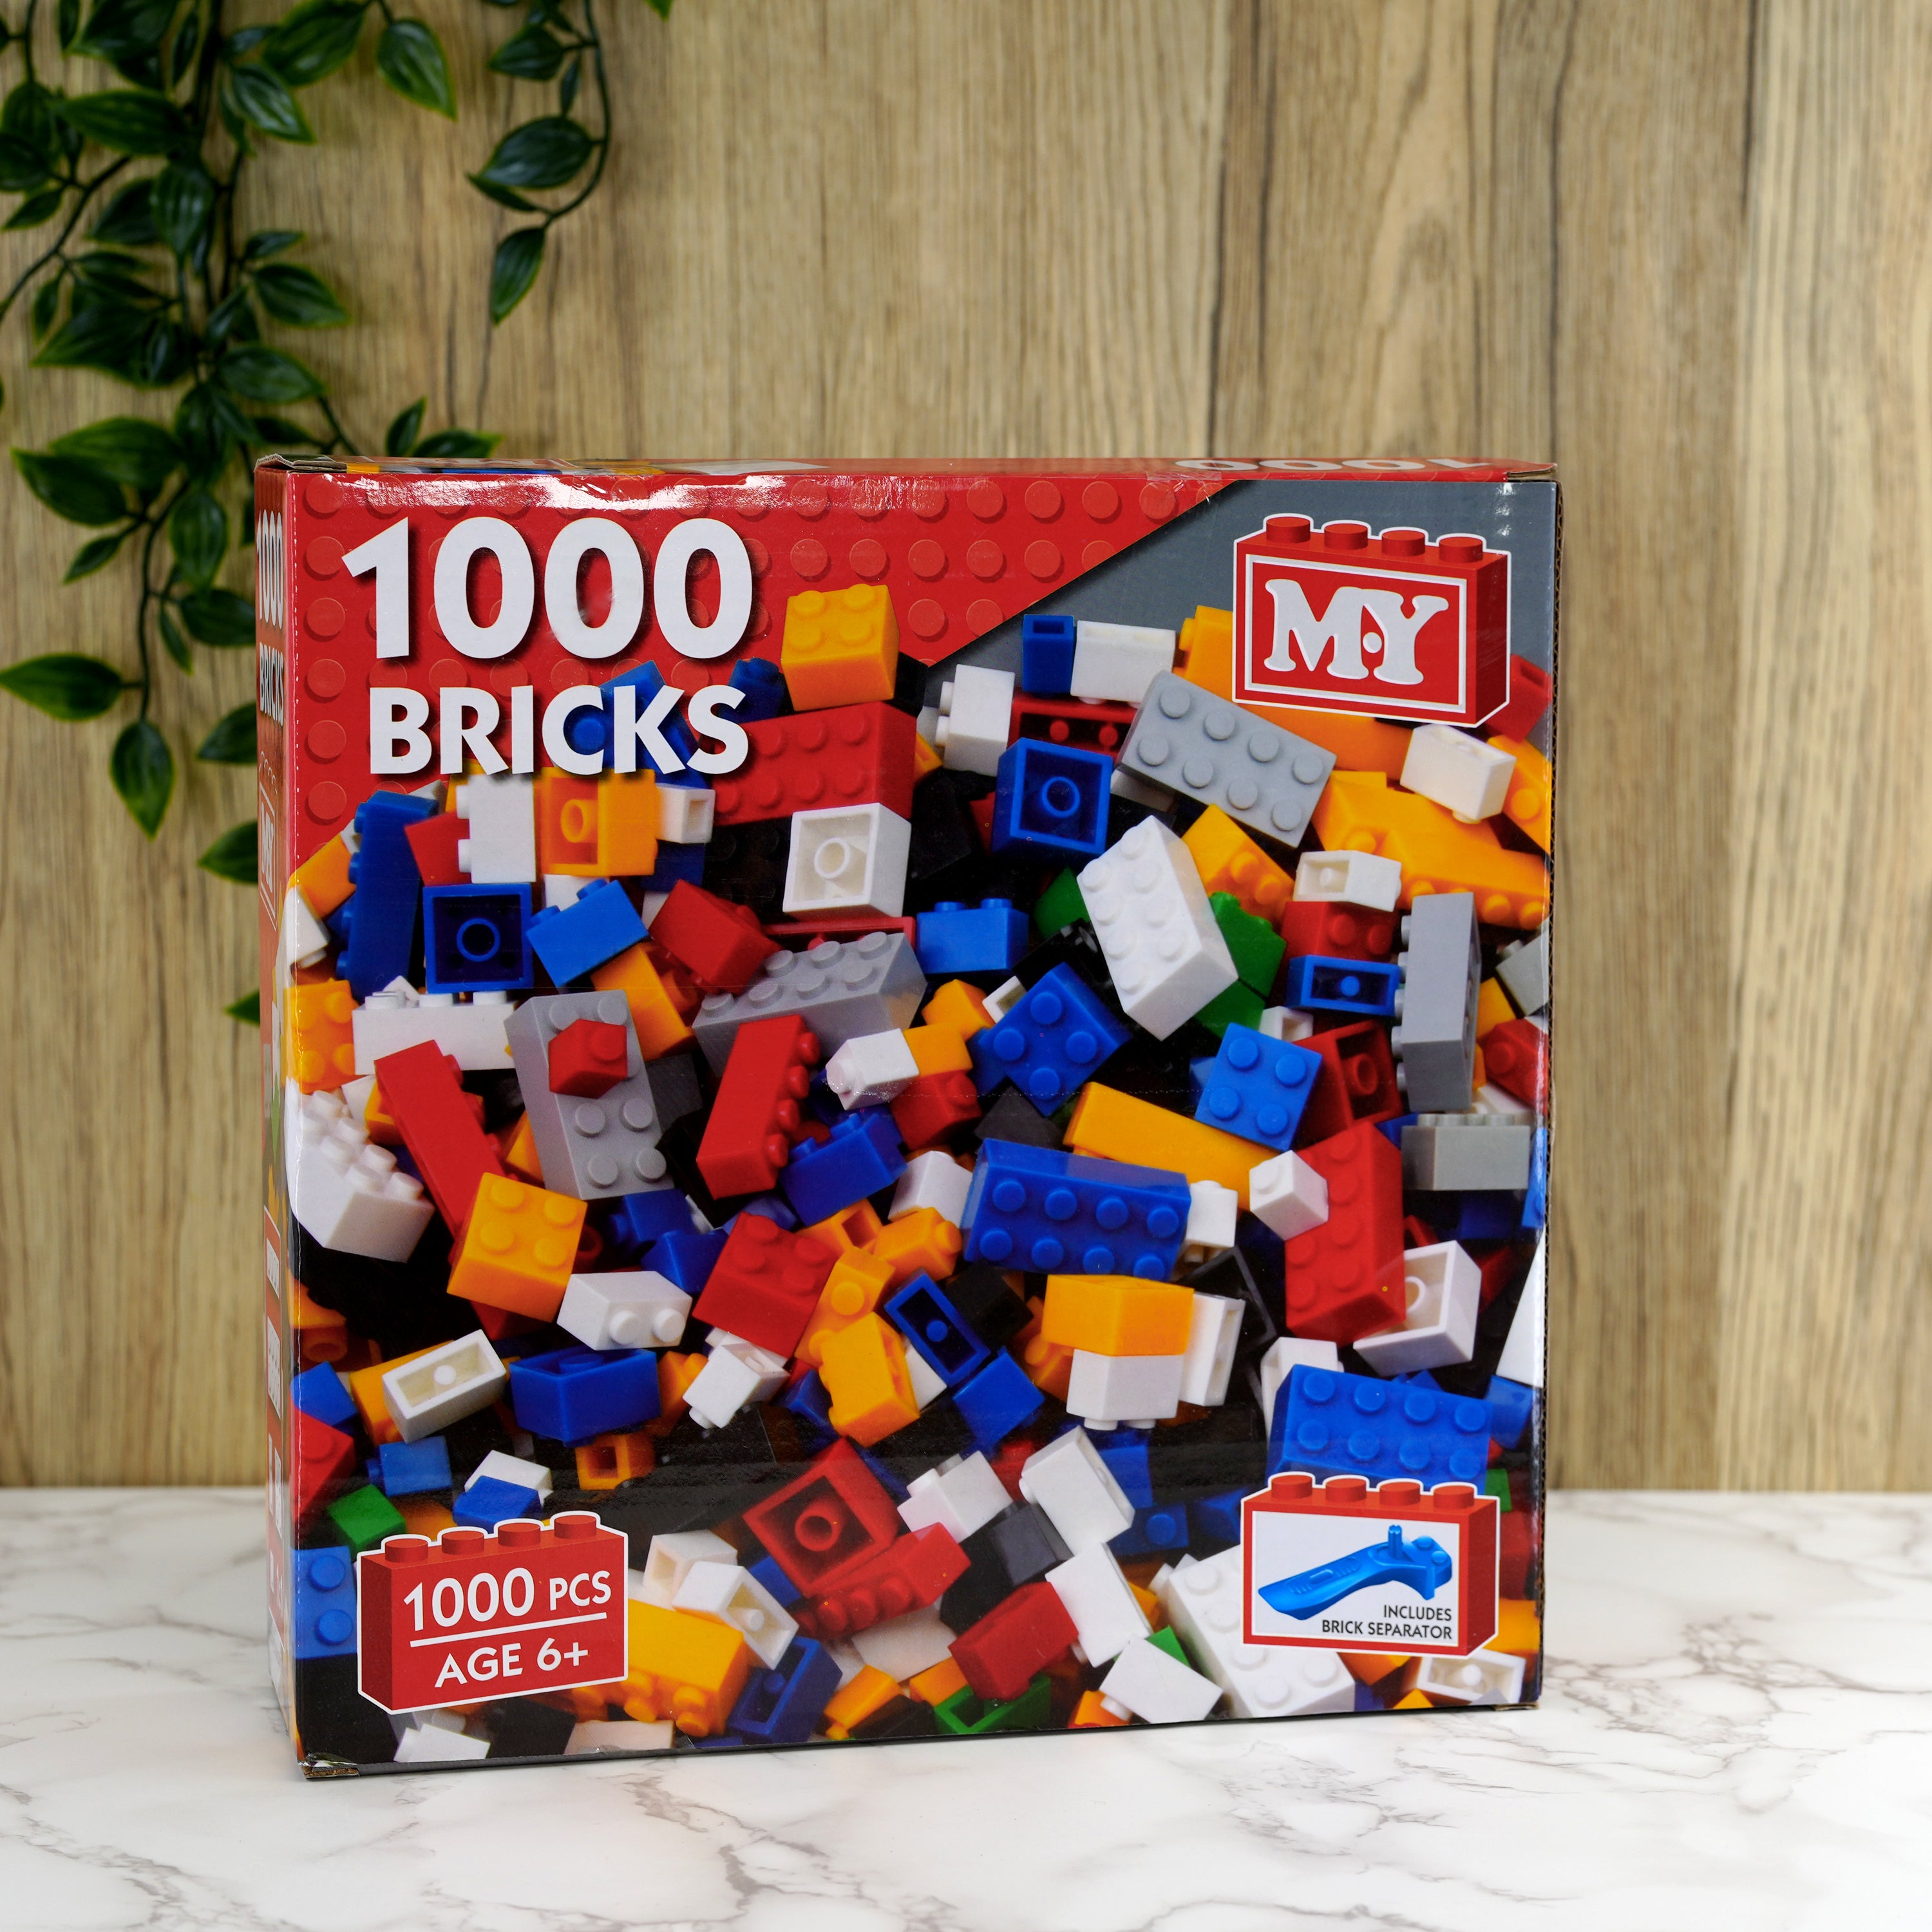 M.Y 1000 Building Bricks The Magic Toy Shop - The Magic Toy Shop